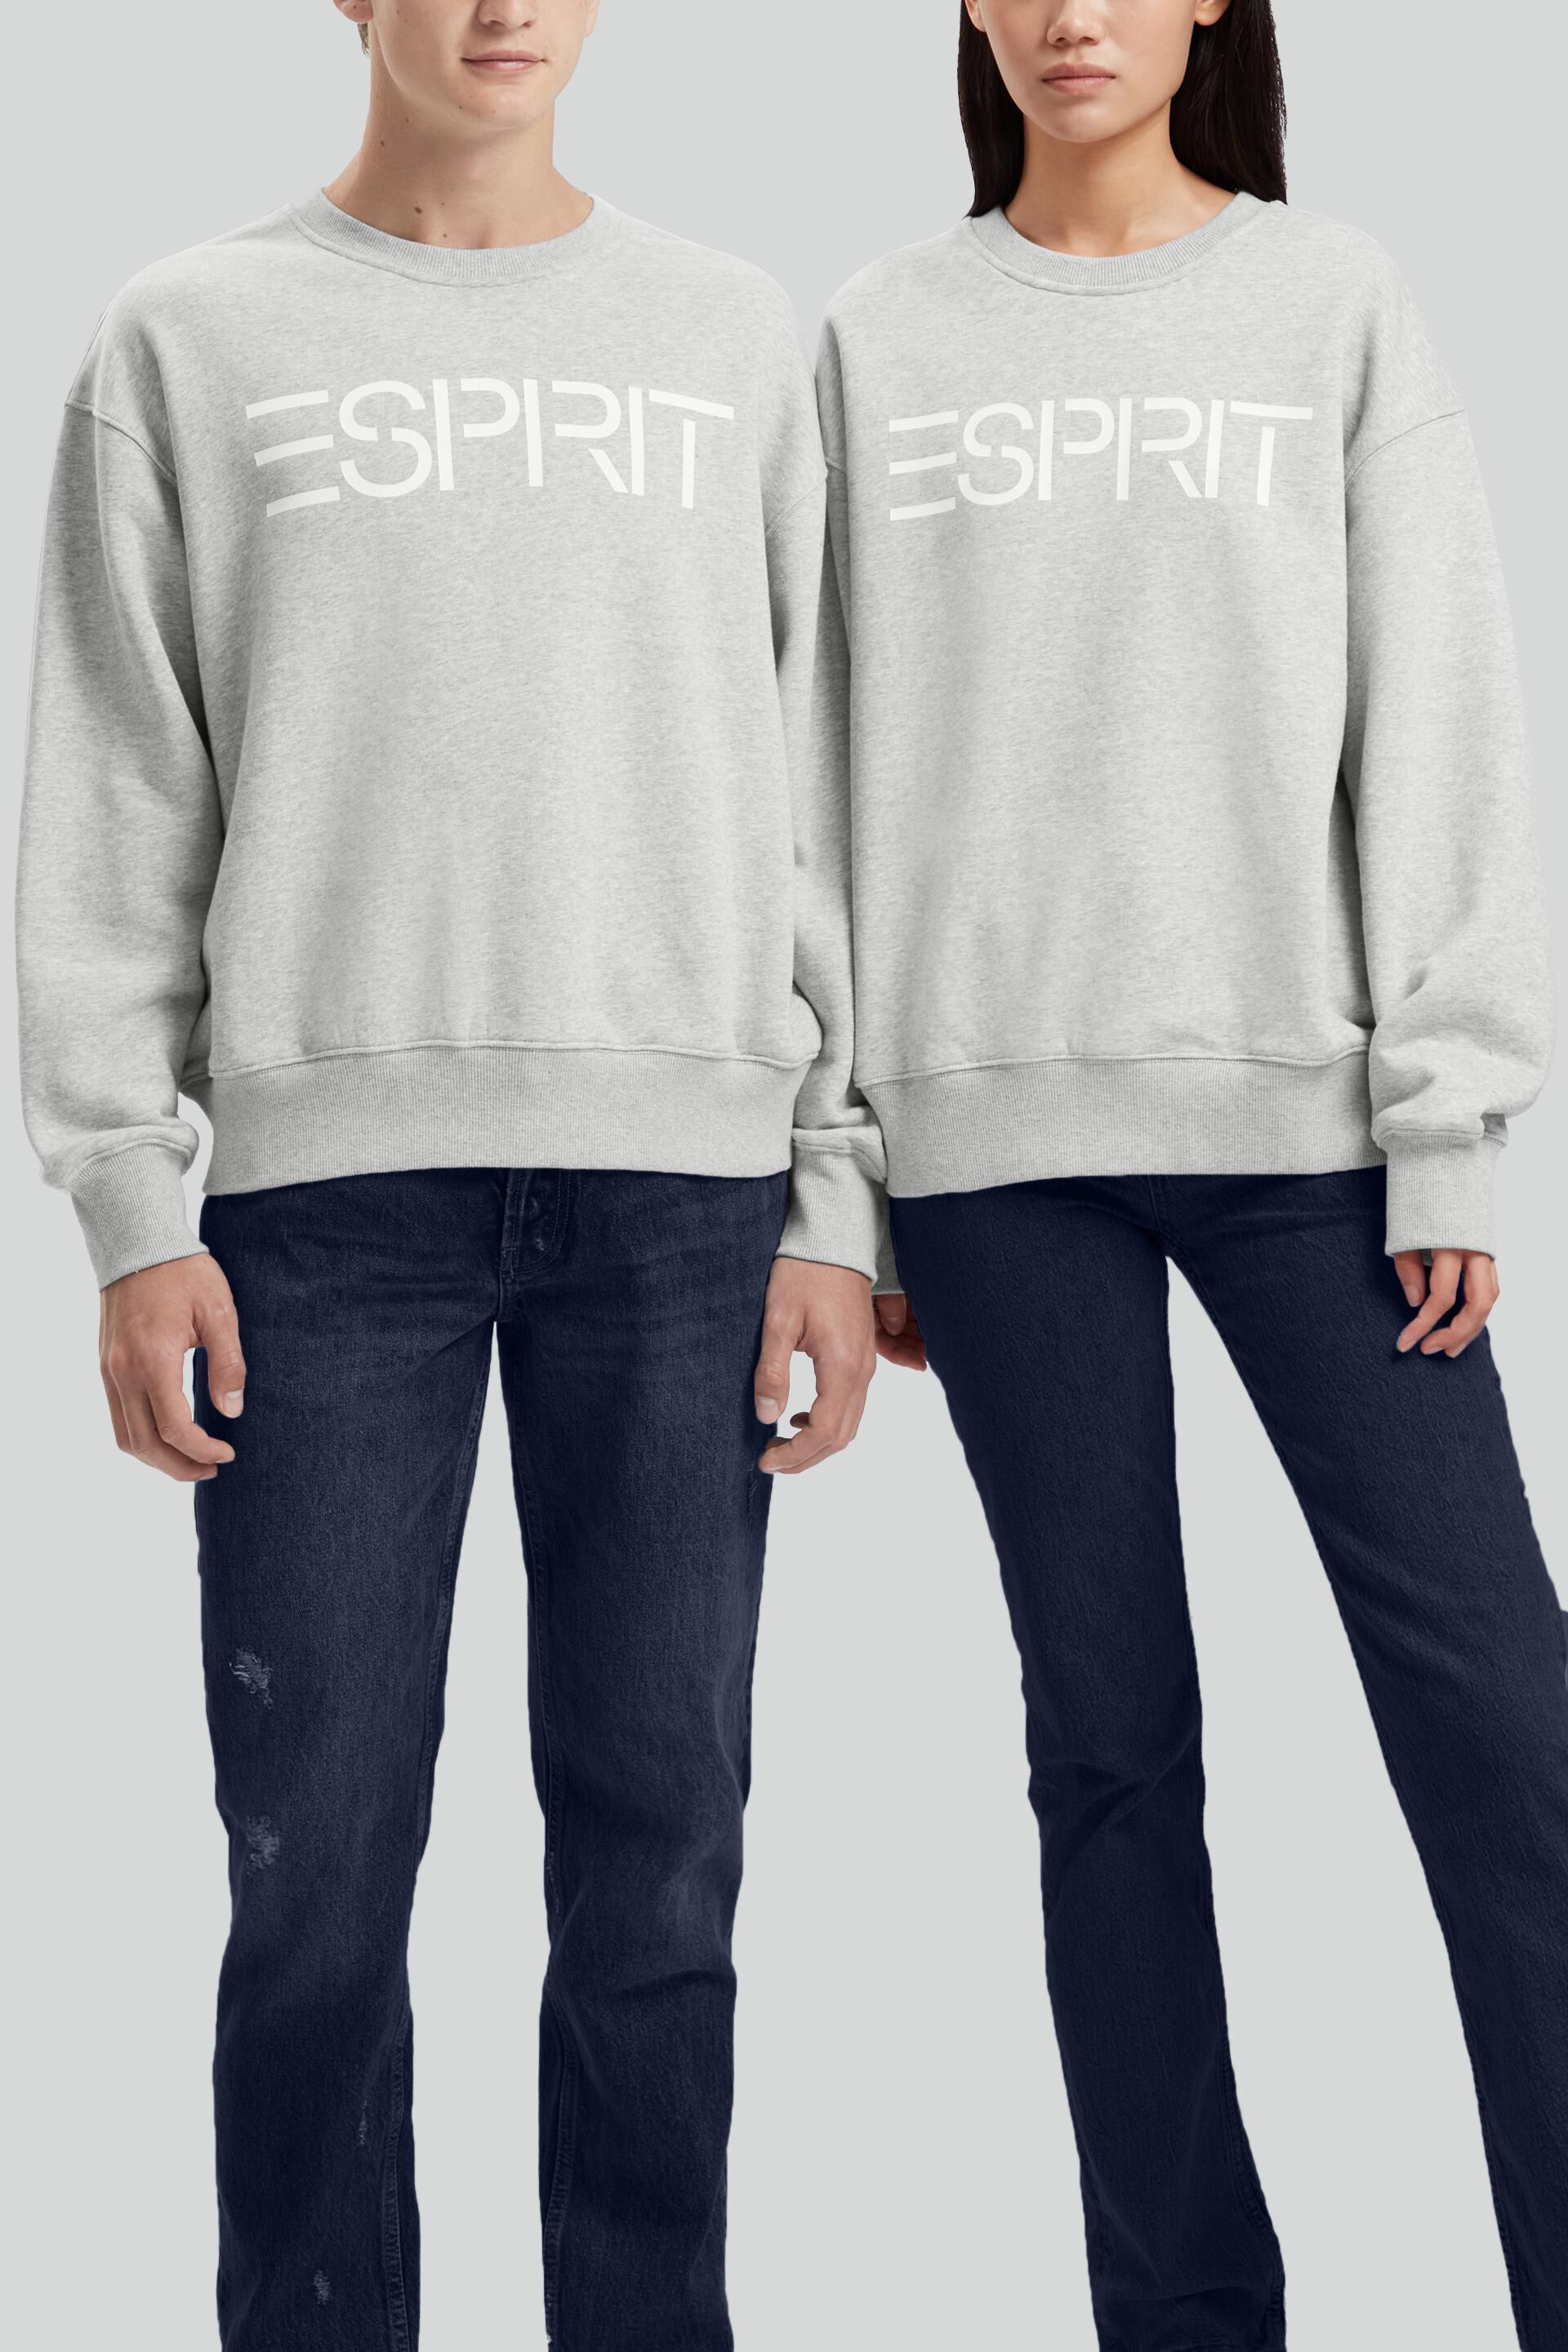 Esprit print logo Unisex with sweatshirt a